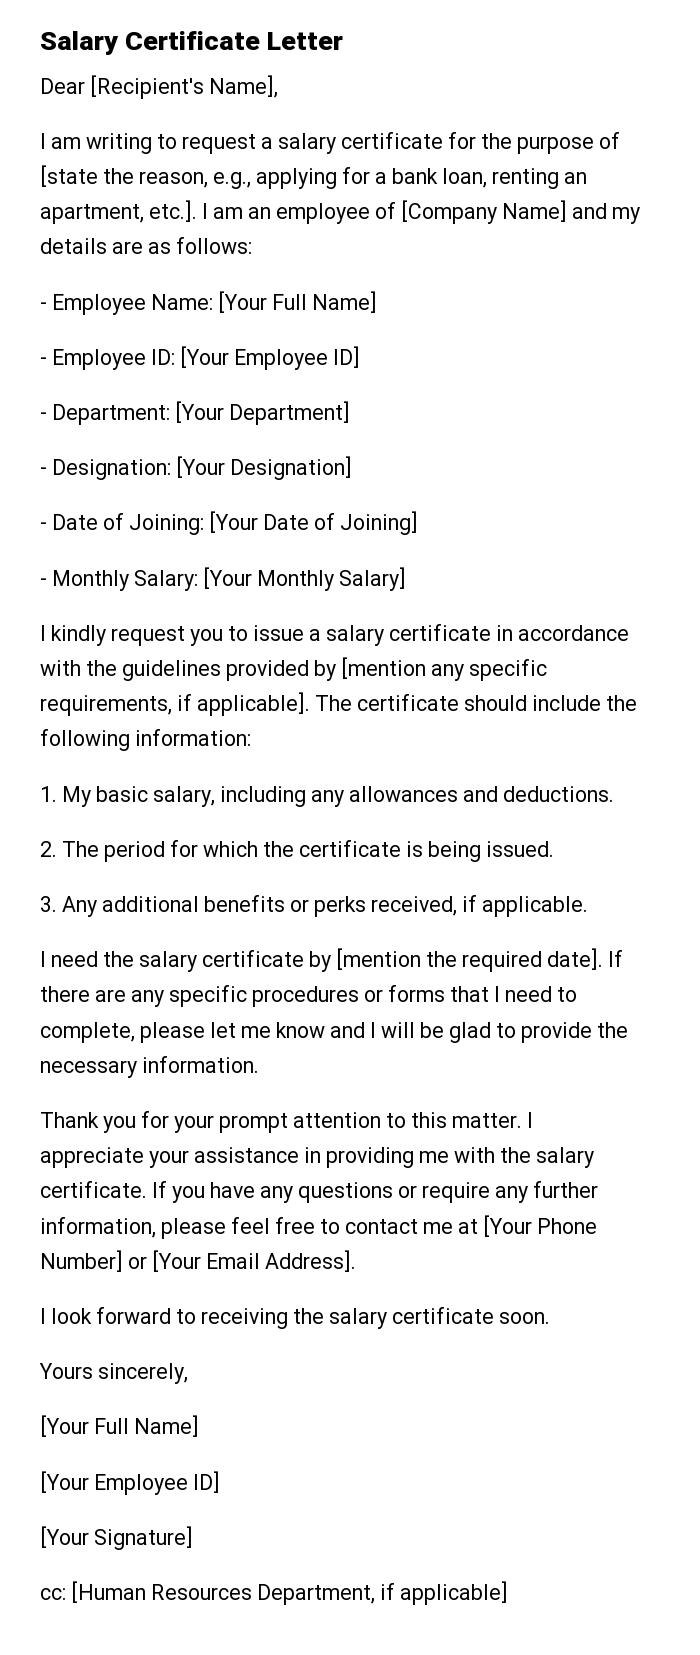 Salary Certificate Letter